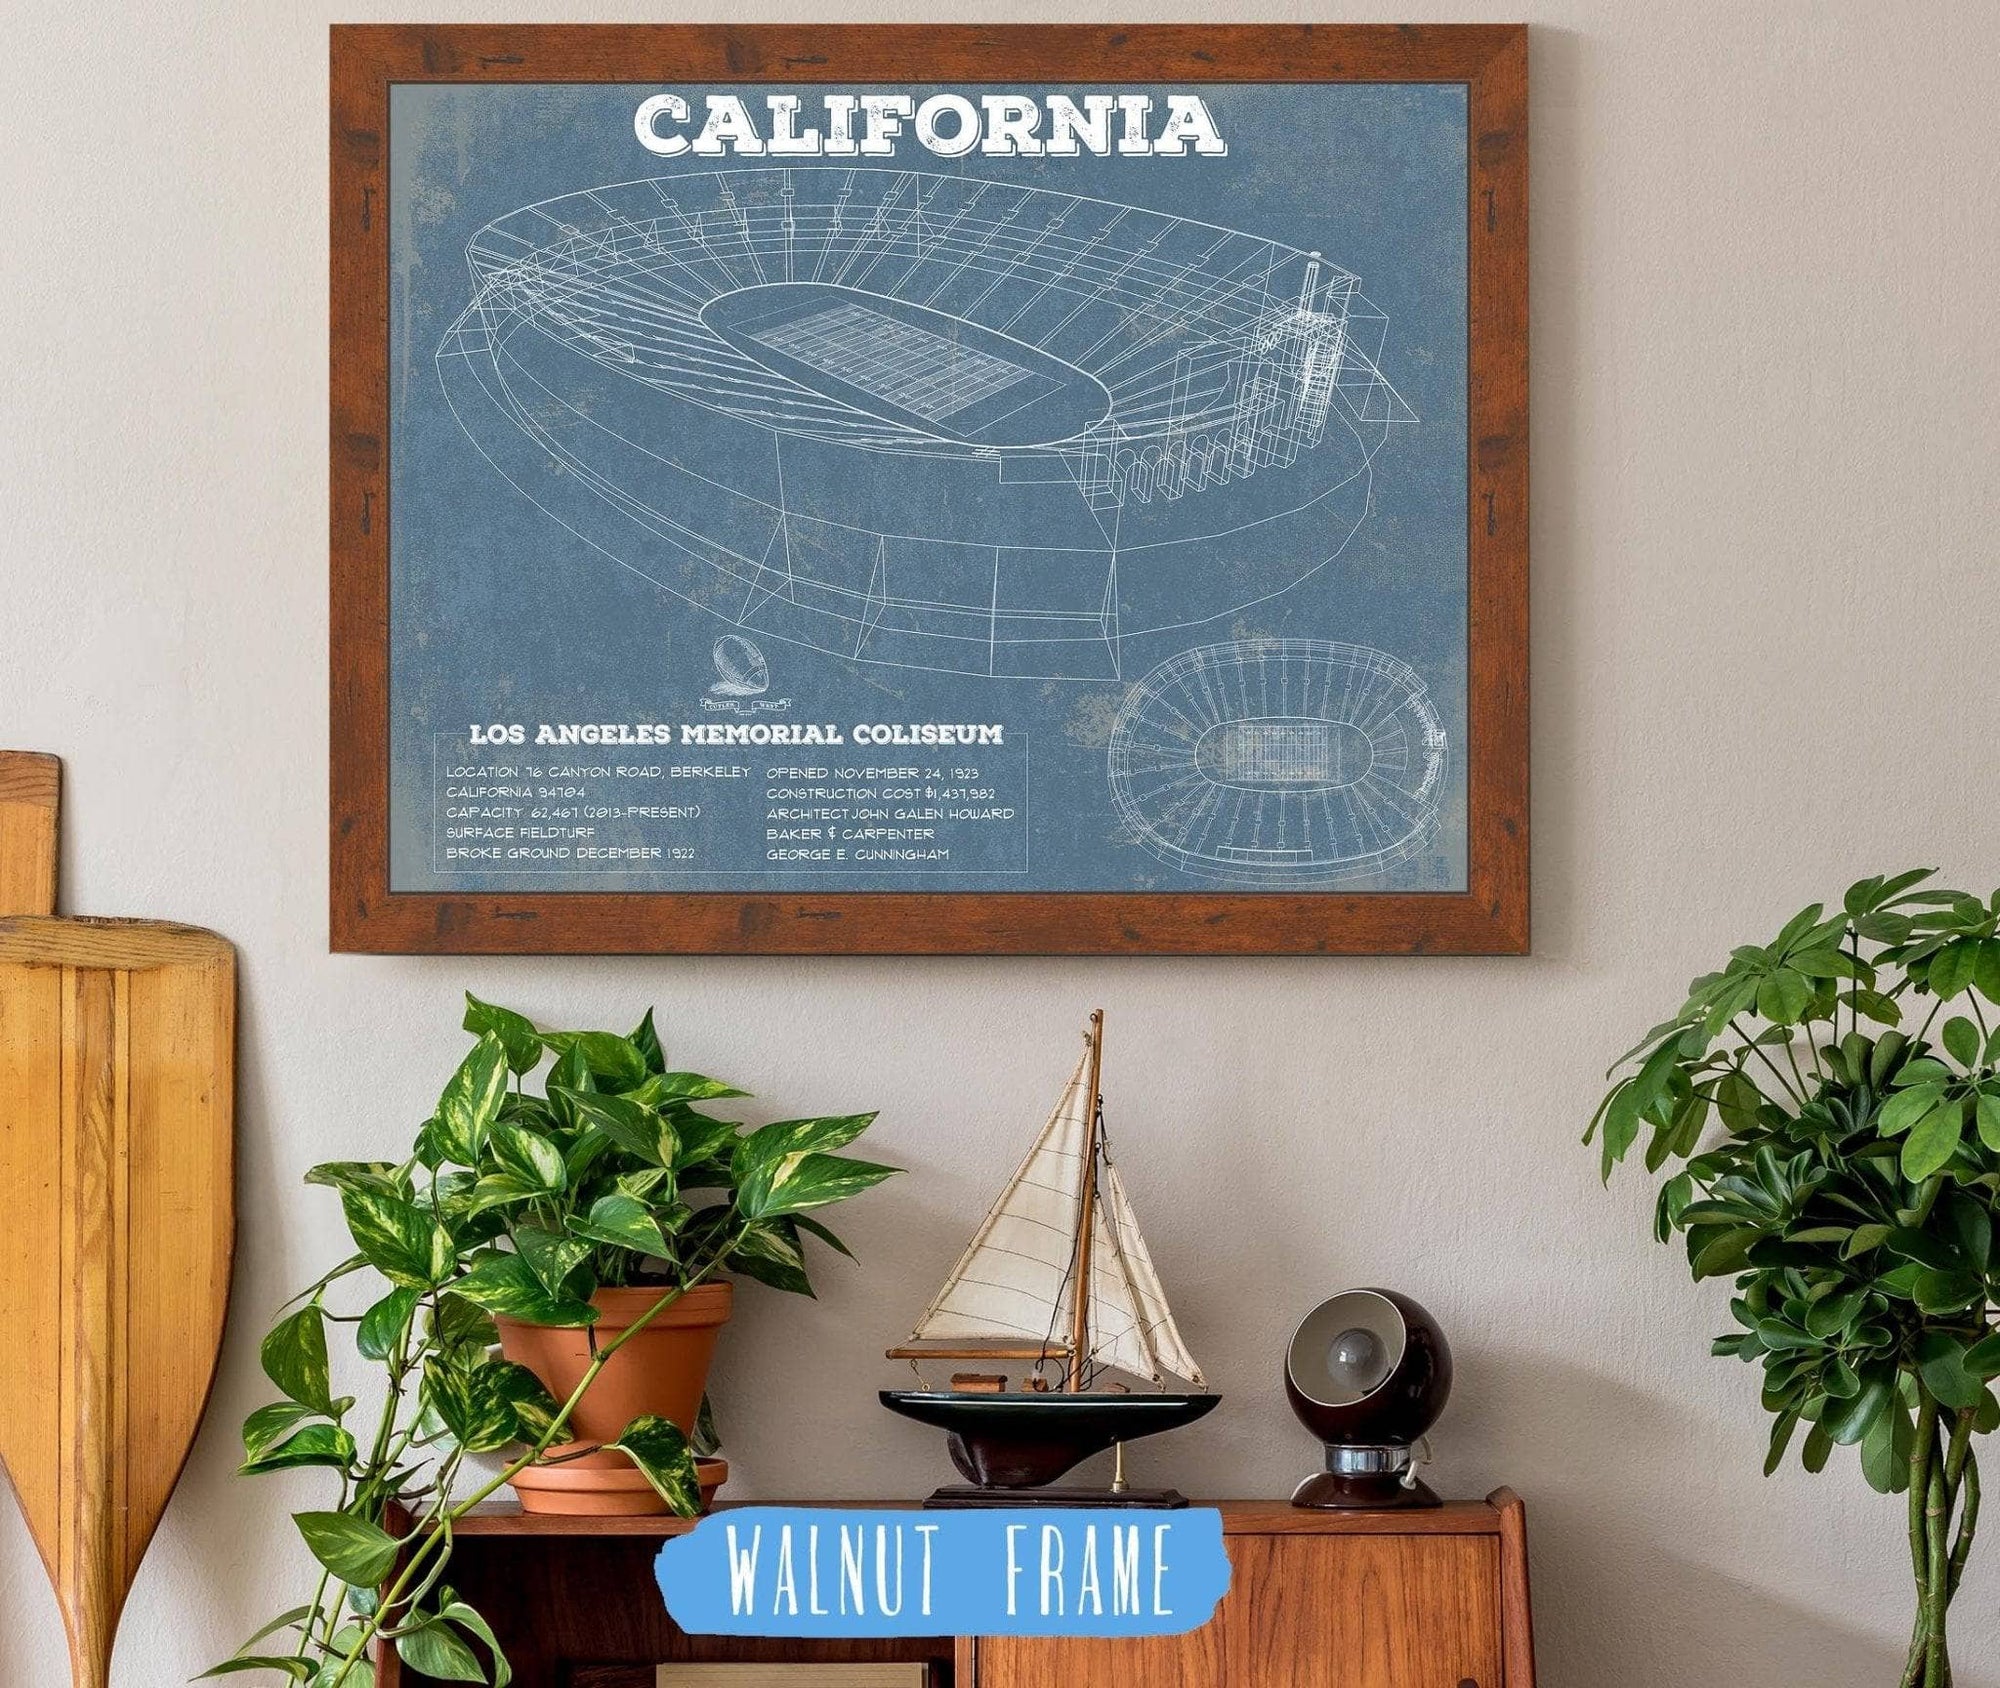 Cutler West College Football Collection 14" x 11" / Walnut Frame California Memorial Stadium Art - University of California Bears Vintage Stadium & Blueprint Art Print 653756595_45176